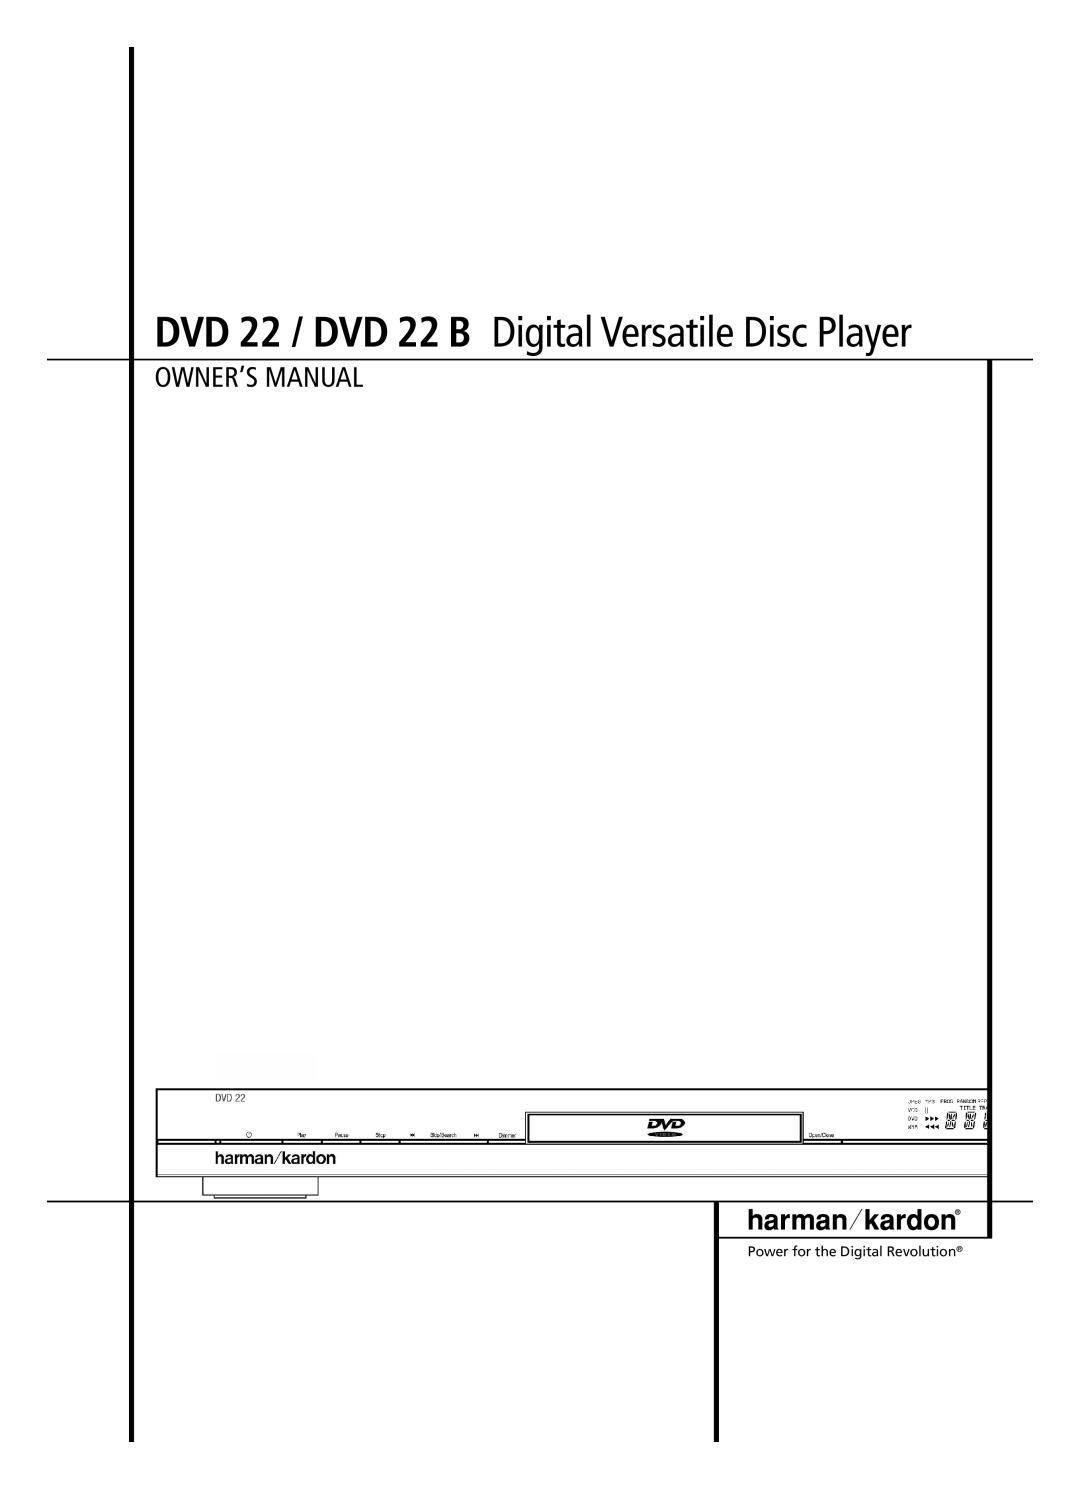 Harman-Kardon DVD22B owner manual DVD 22 / DVD 22 B Digital Versatile Disc Player 